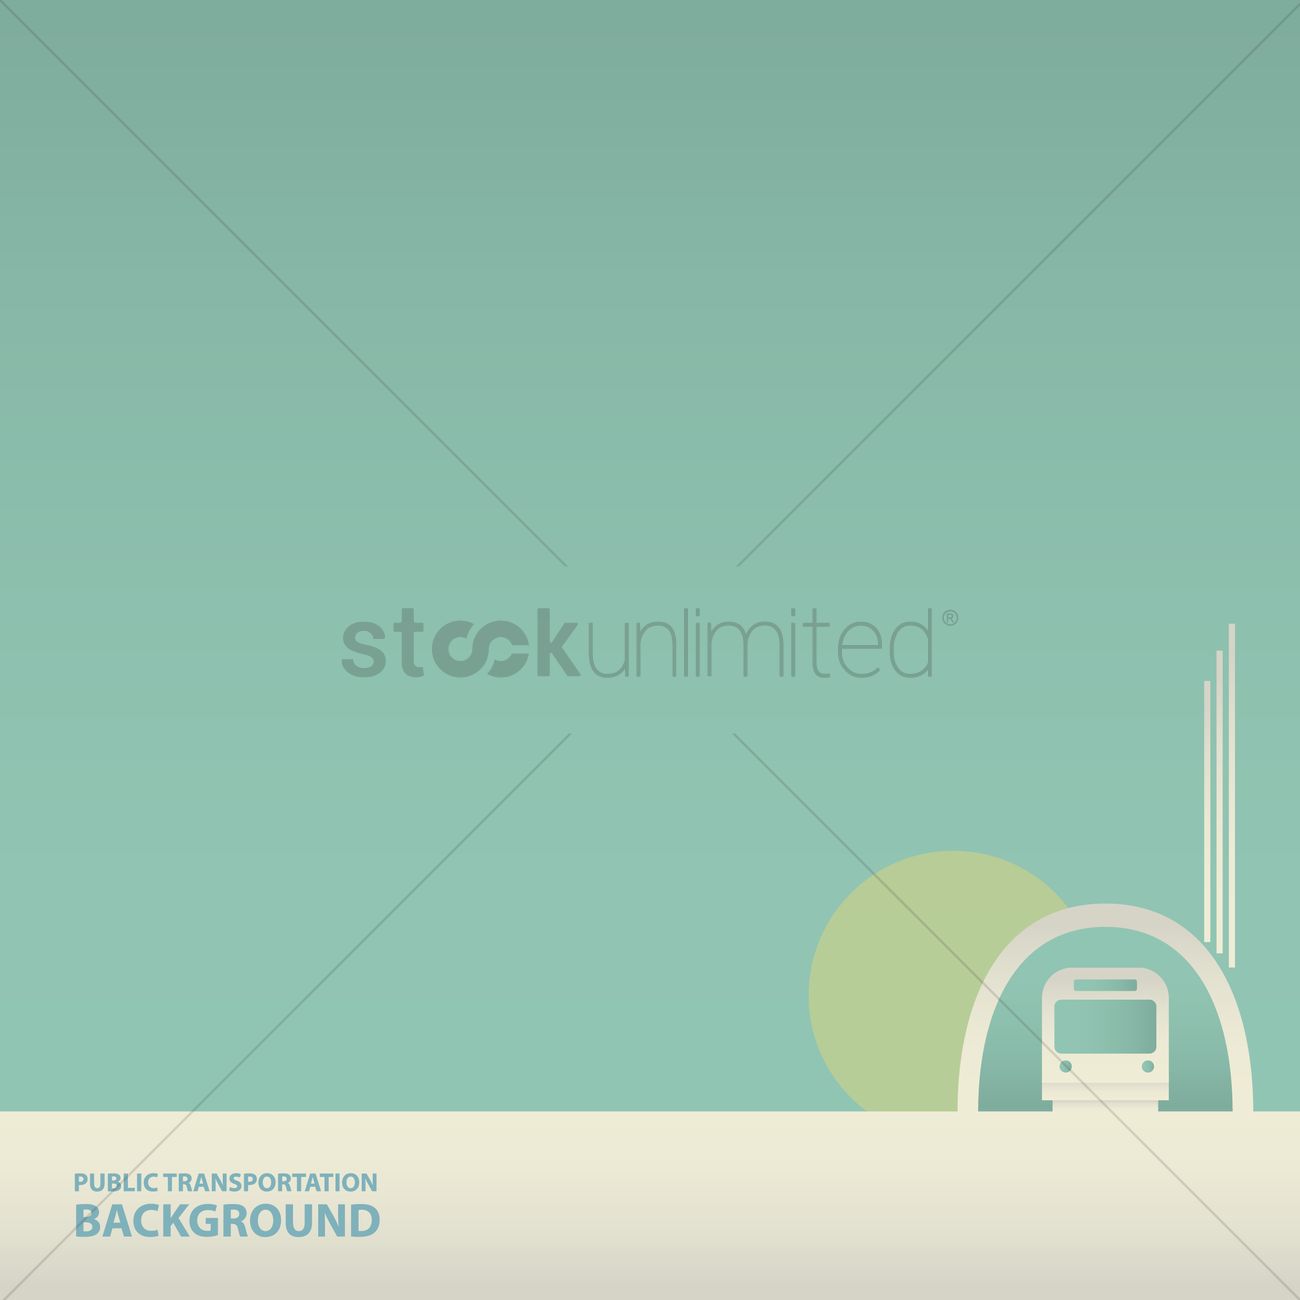 Public Transportation Background Vector Image